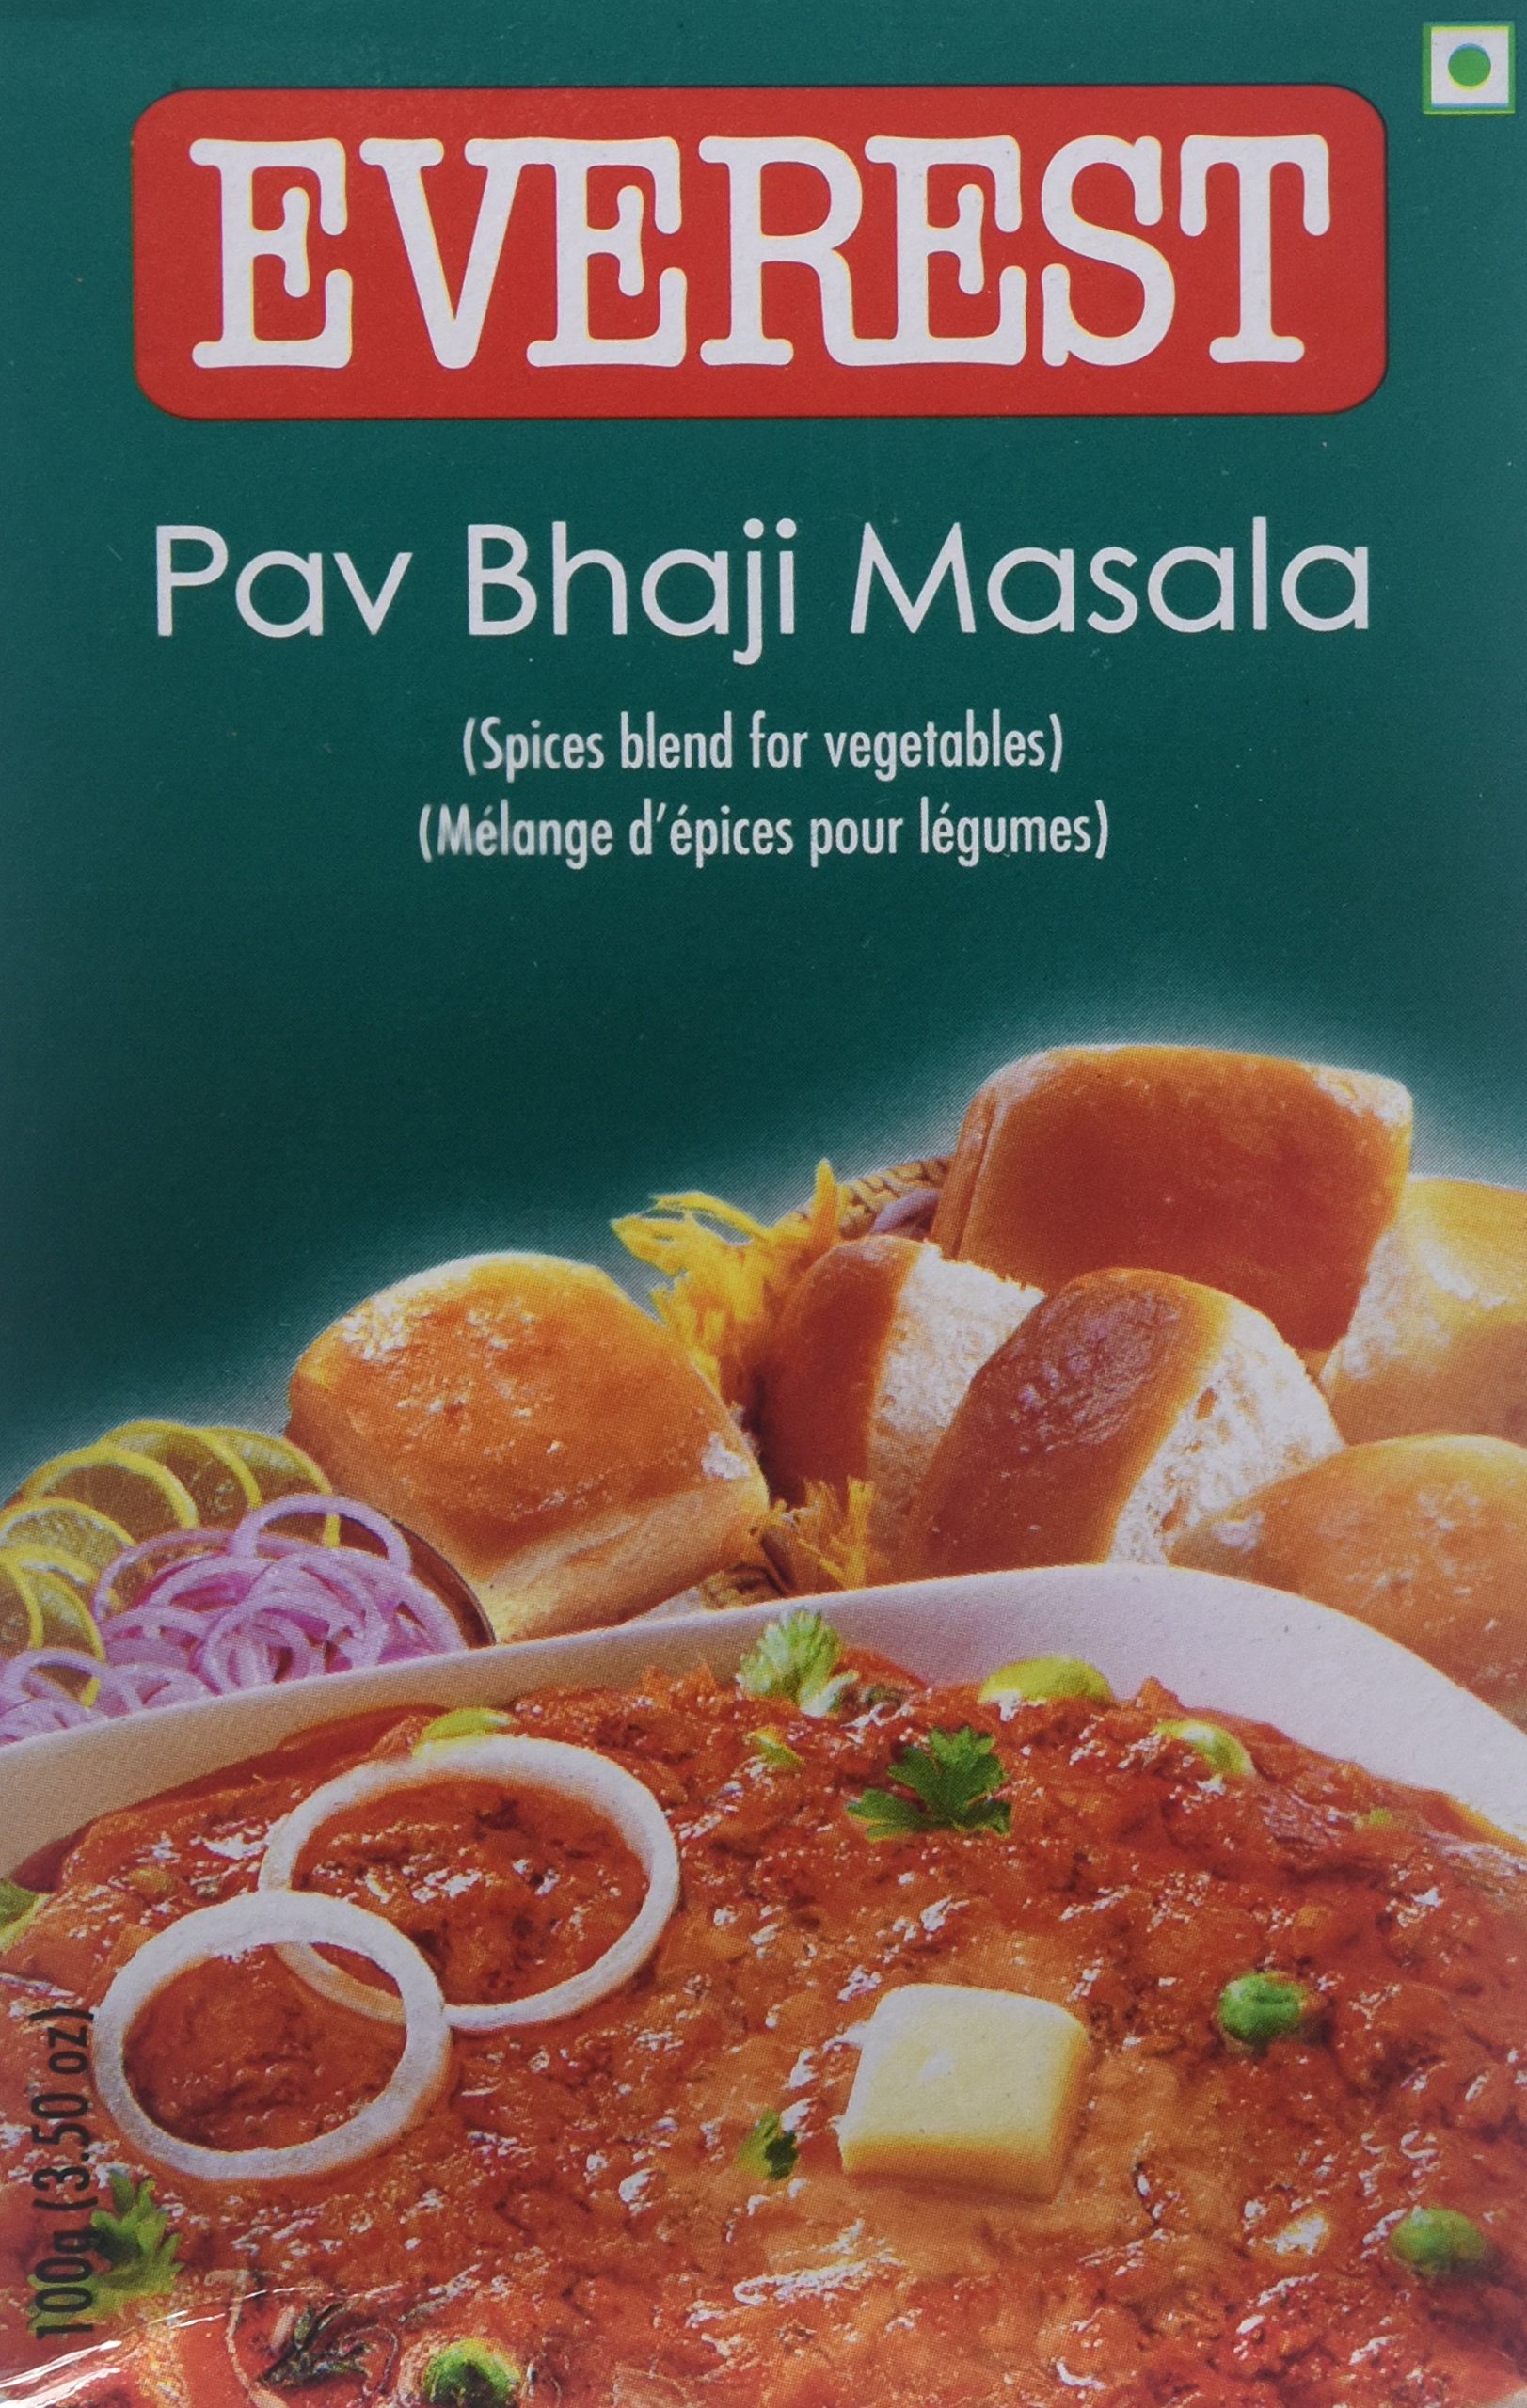 PAV BHAJI MASALA Spices blend for vegetables, Everest (ПАВ БХАДЖИ МАСАЛА смесь специй для овощей, Эверест), 100 г.